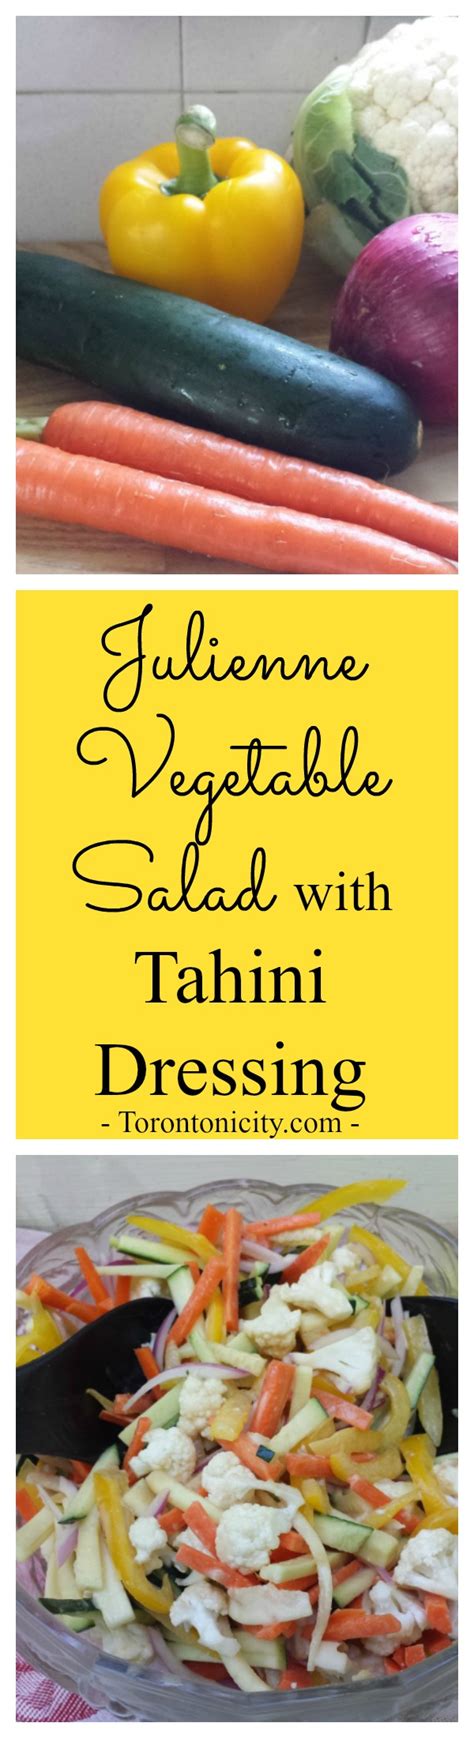 Julienne Vegetable Salad With Tahini Dressing Enjoy This Summer Salad